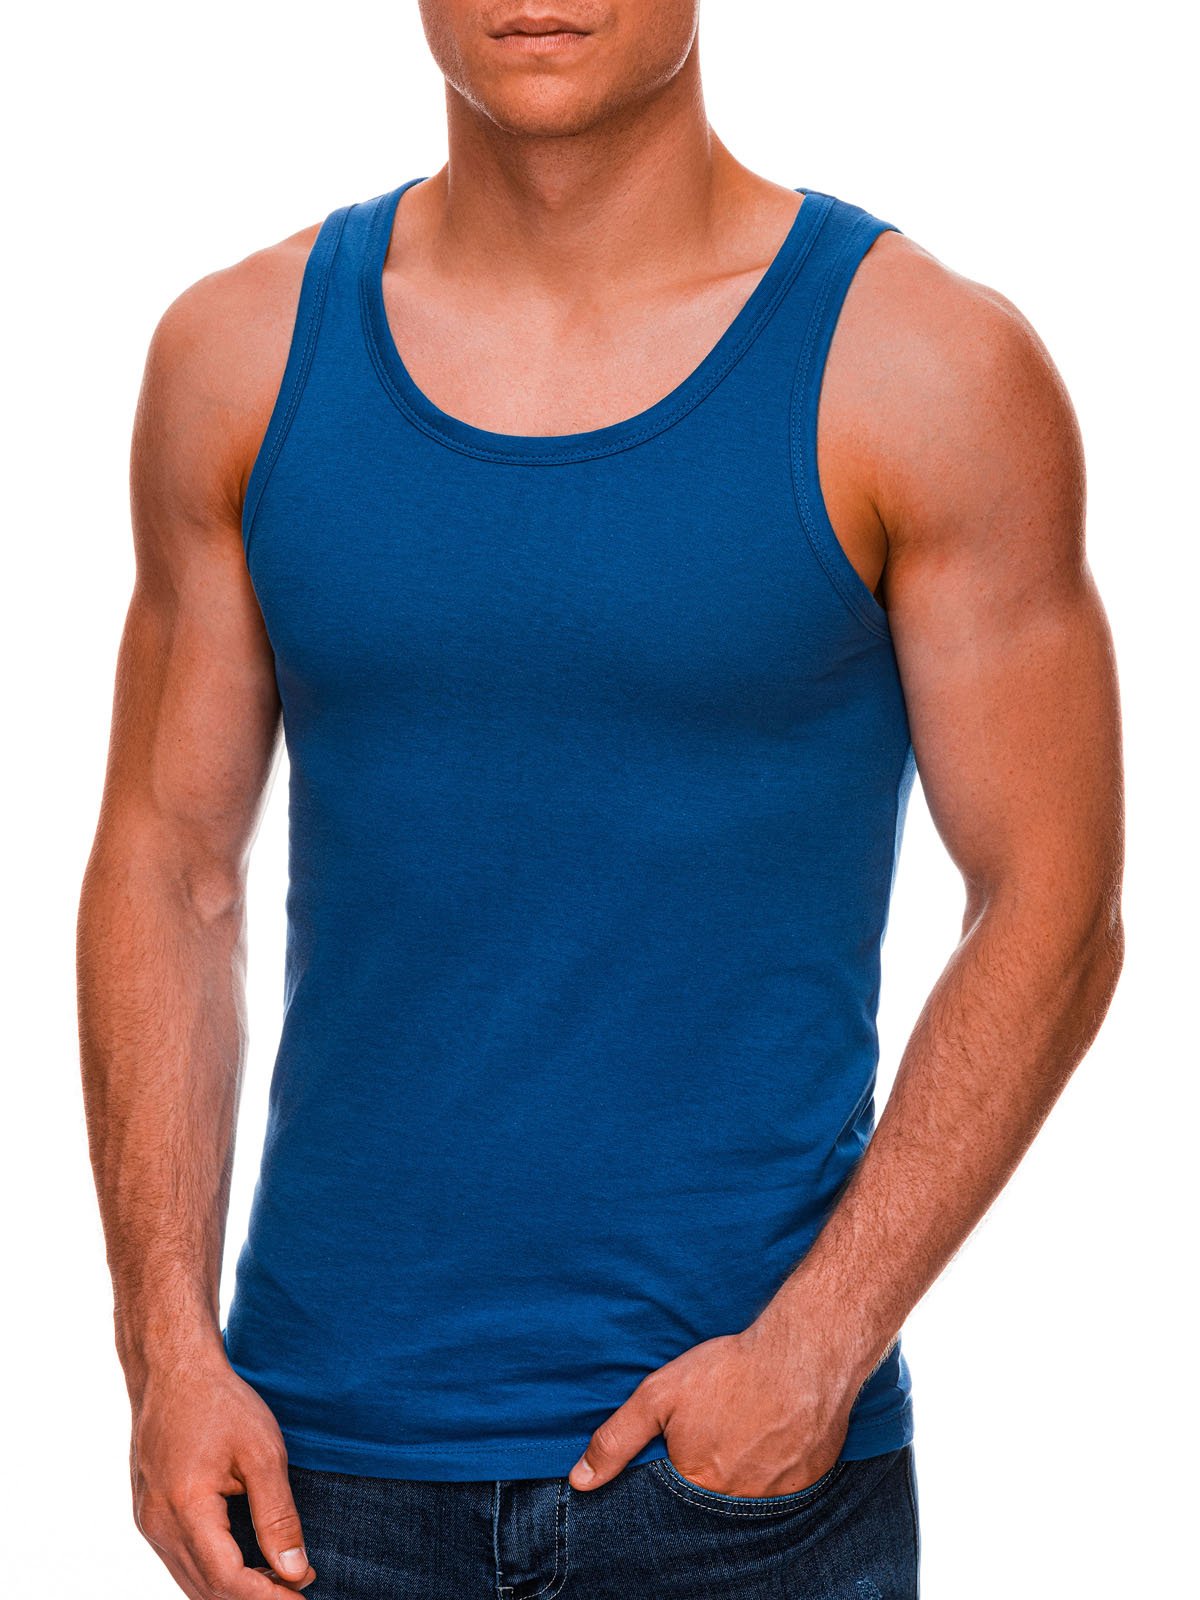 Emigreren Optimistisch Leuren Men's plain tank top S708 - blue | MODONE wholesale - Clothing For Men